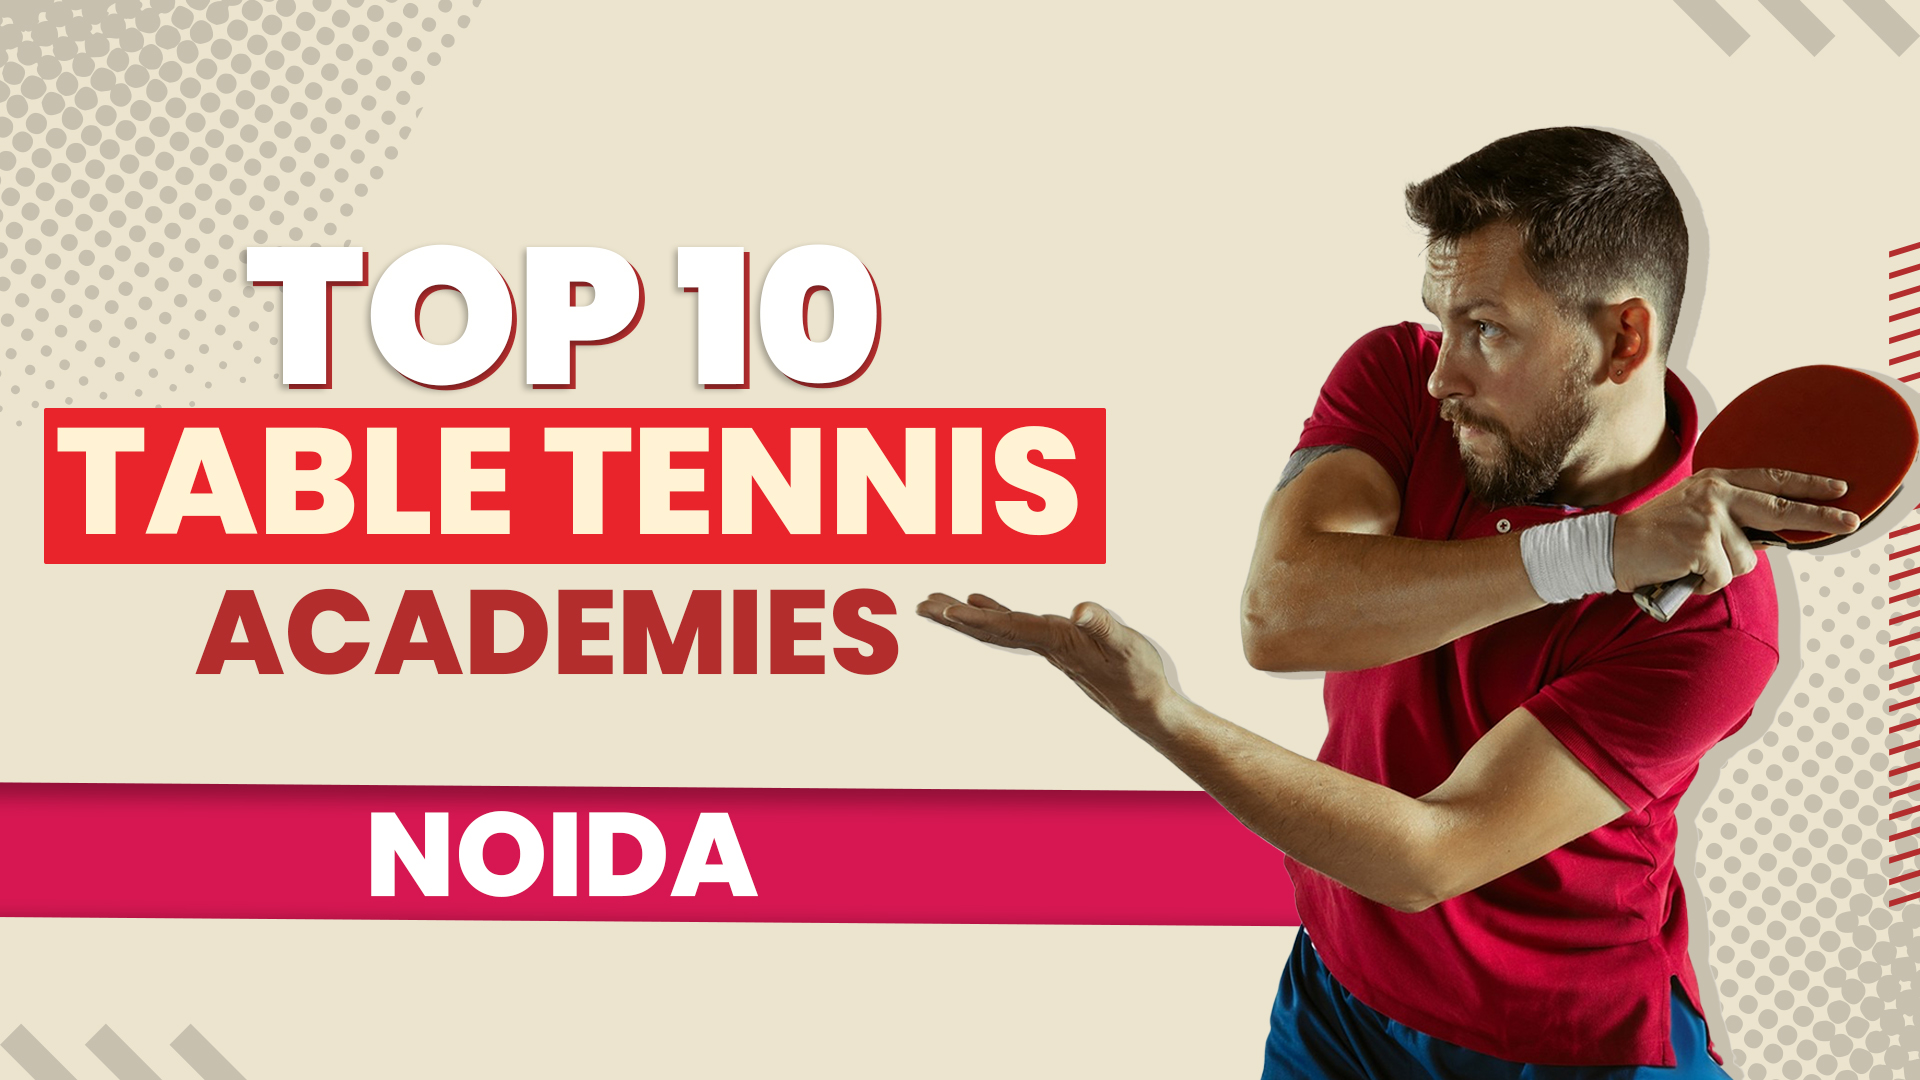 Top 10 Table Tennis Academies in Noida, India